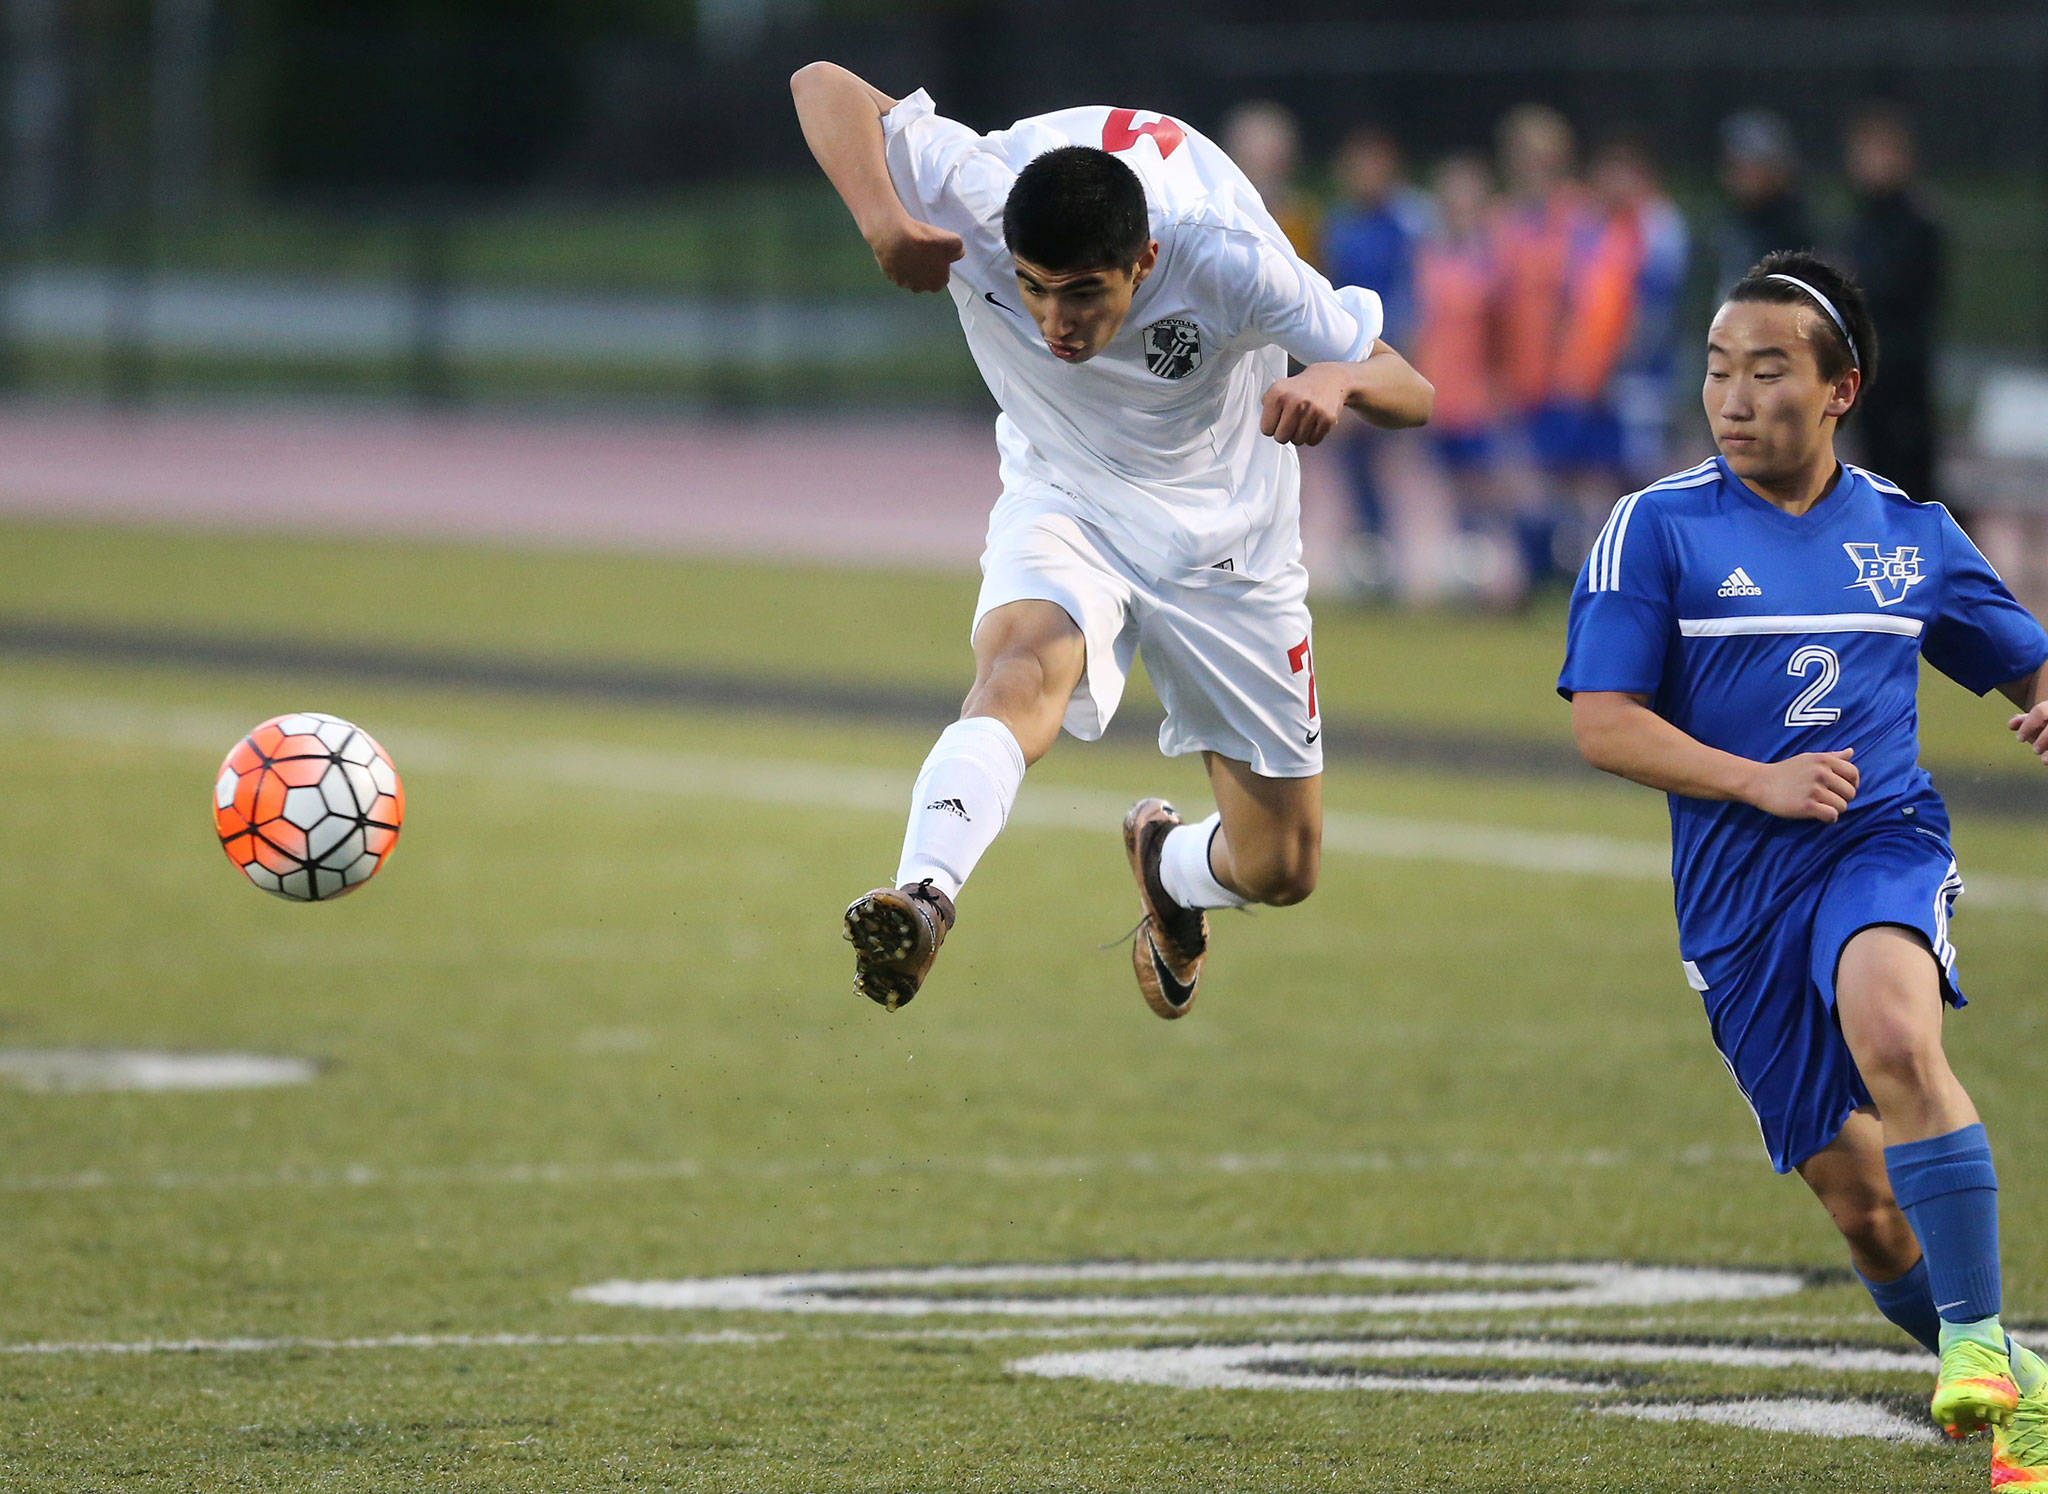 Aram Leyva jumps to kick the ball as Bellevue Christian’s John Kim closes in. (Photo by John Fisken)